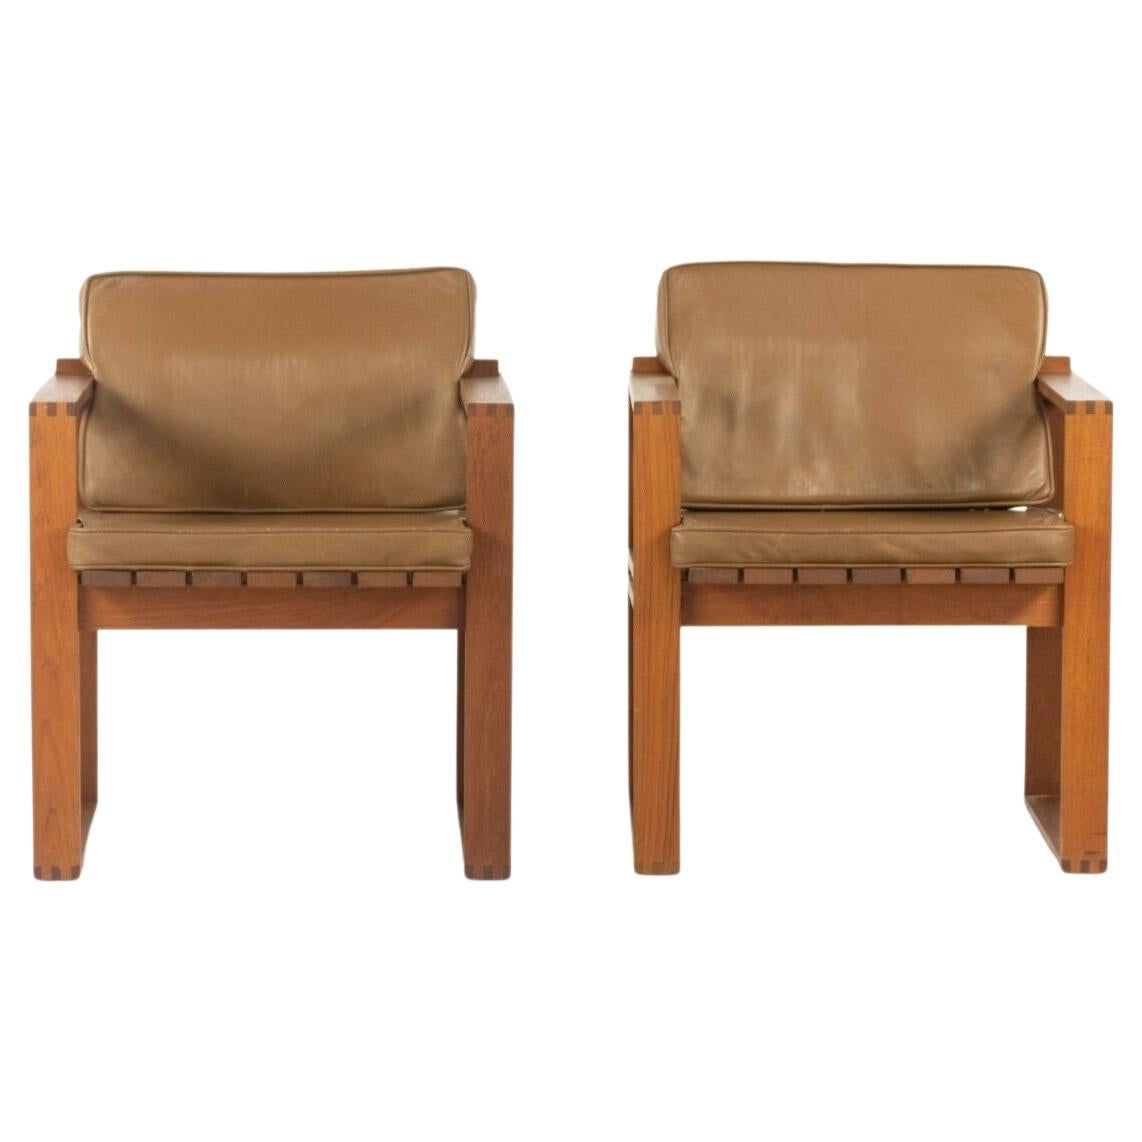 Bodil Kjaer Side Chairs